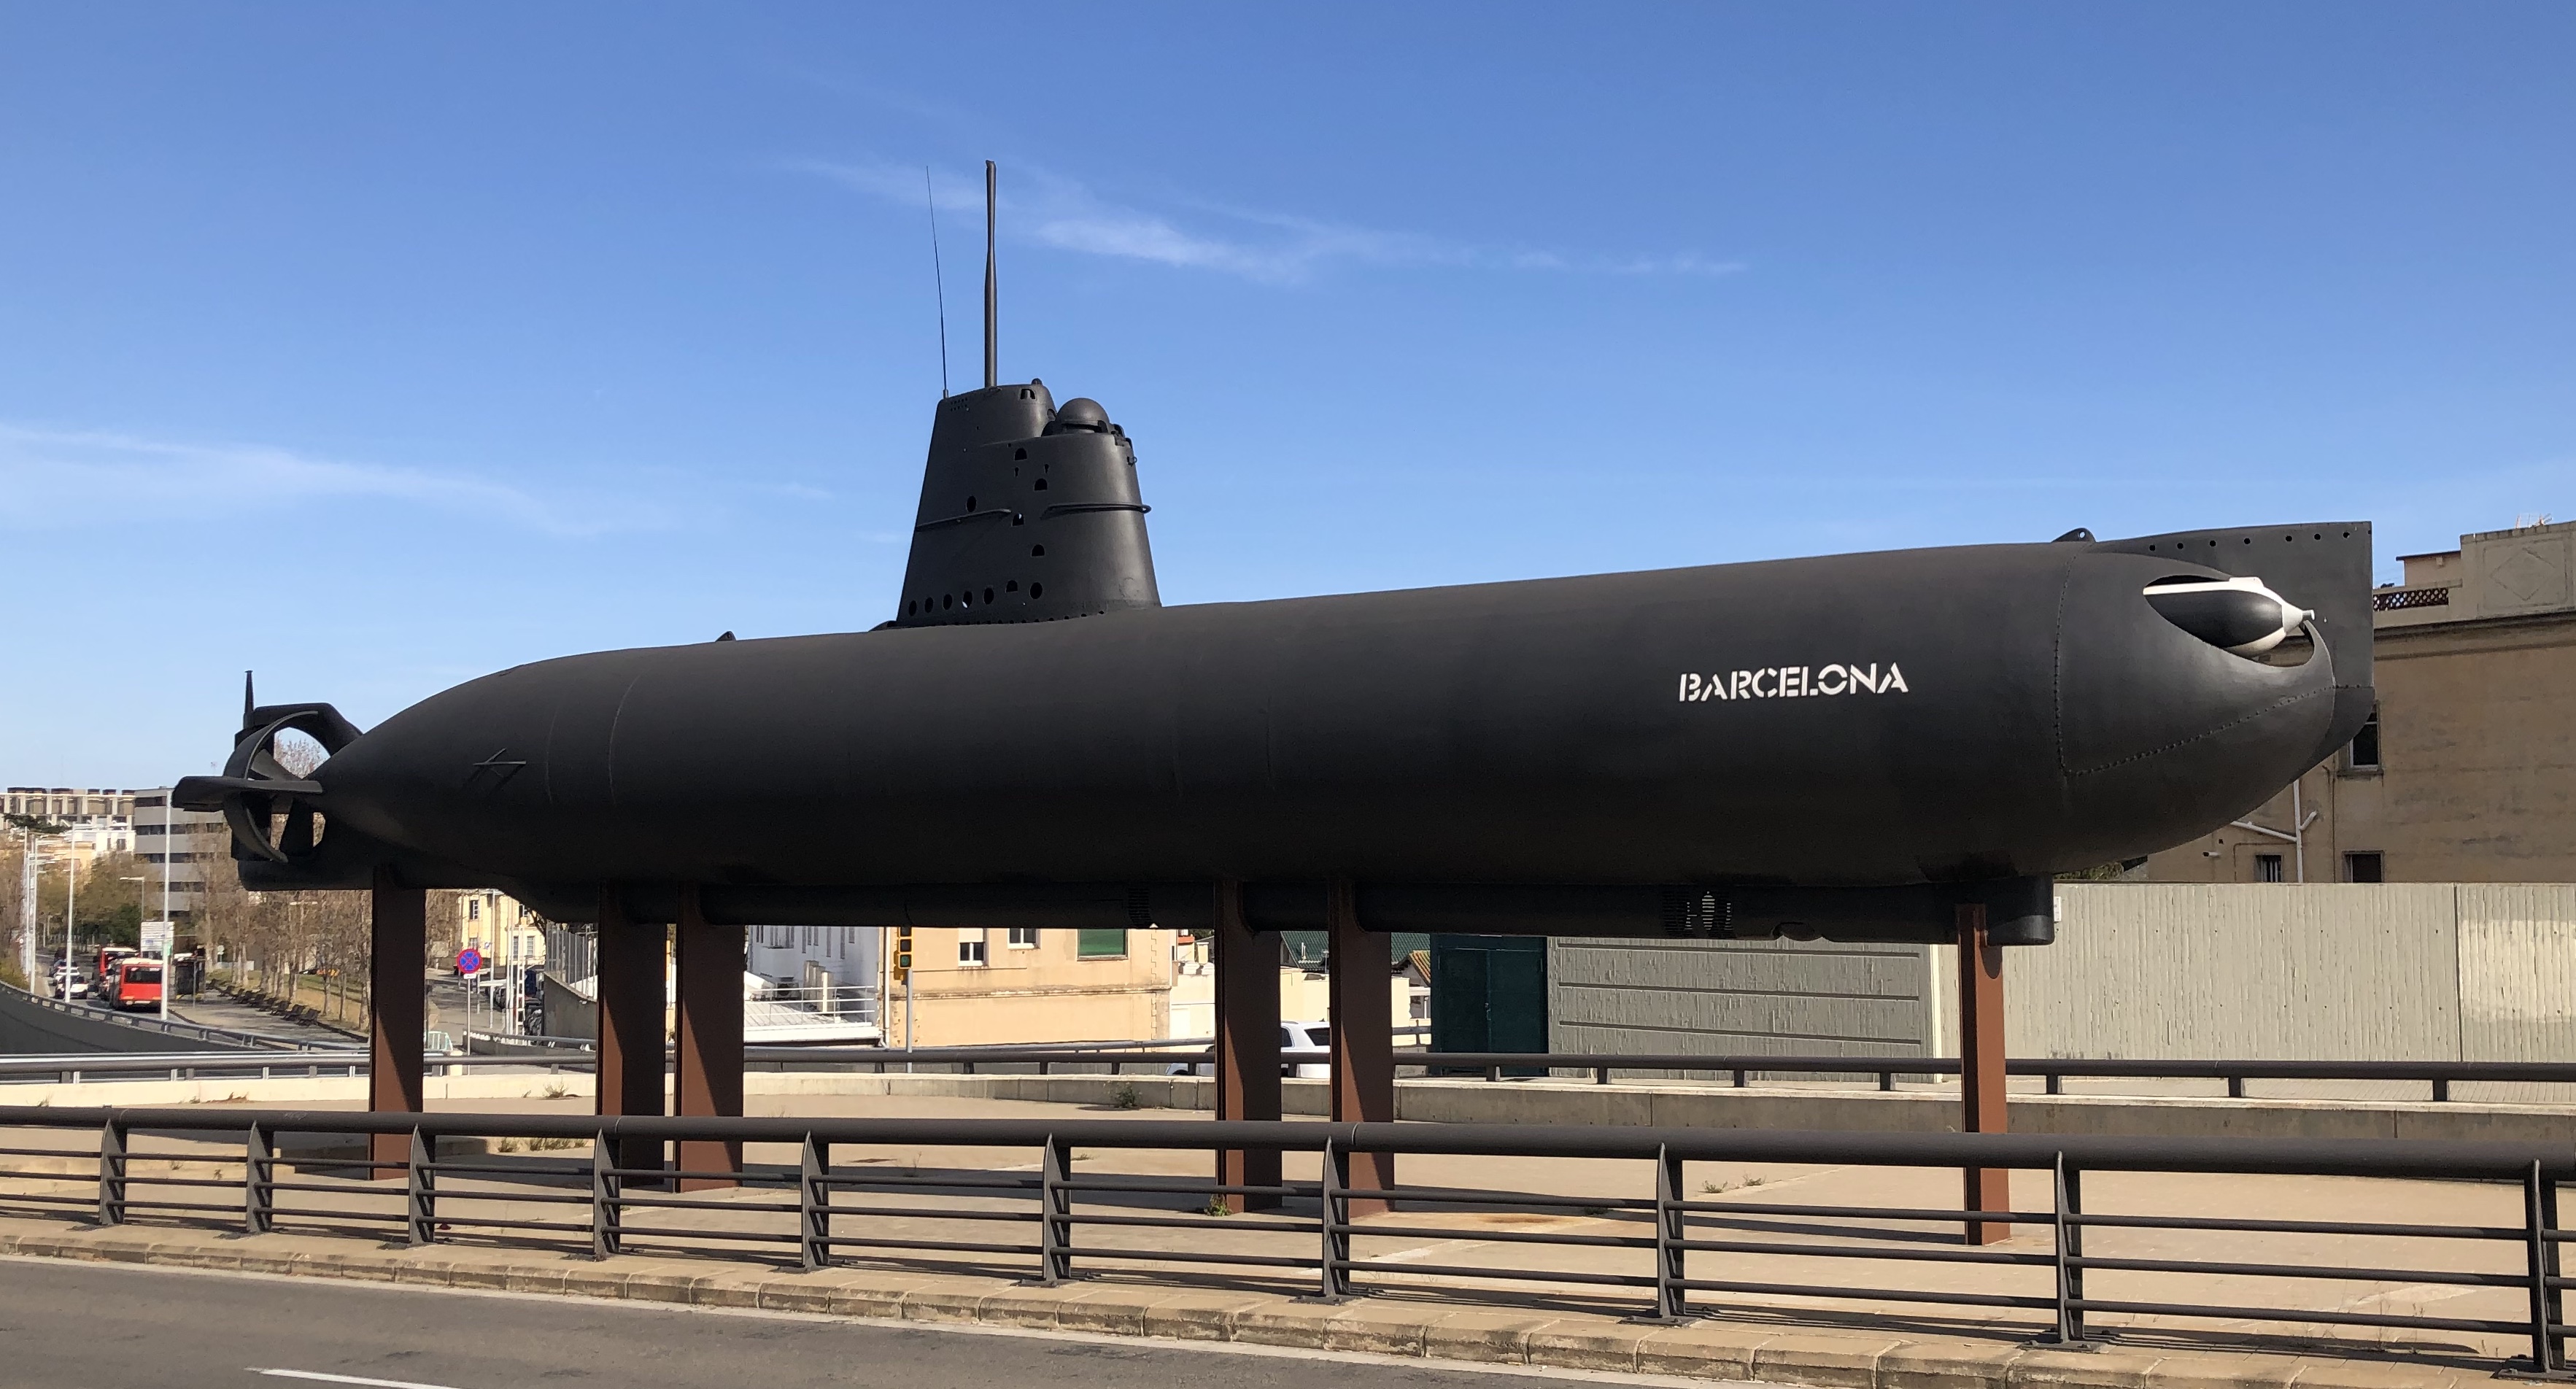 Barcelona submarine